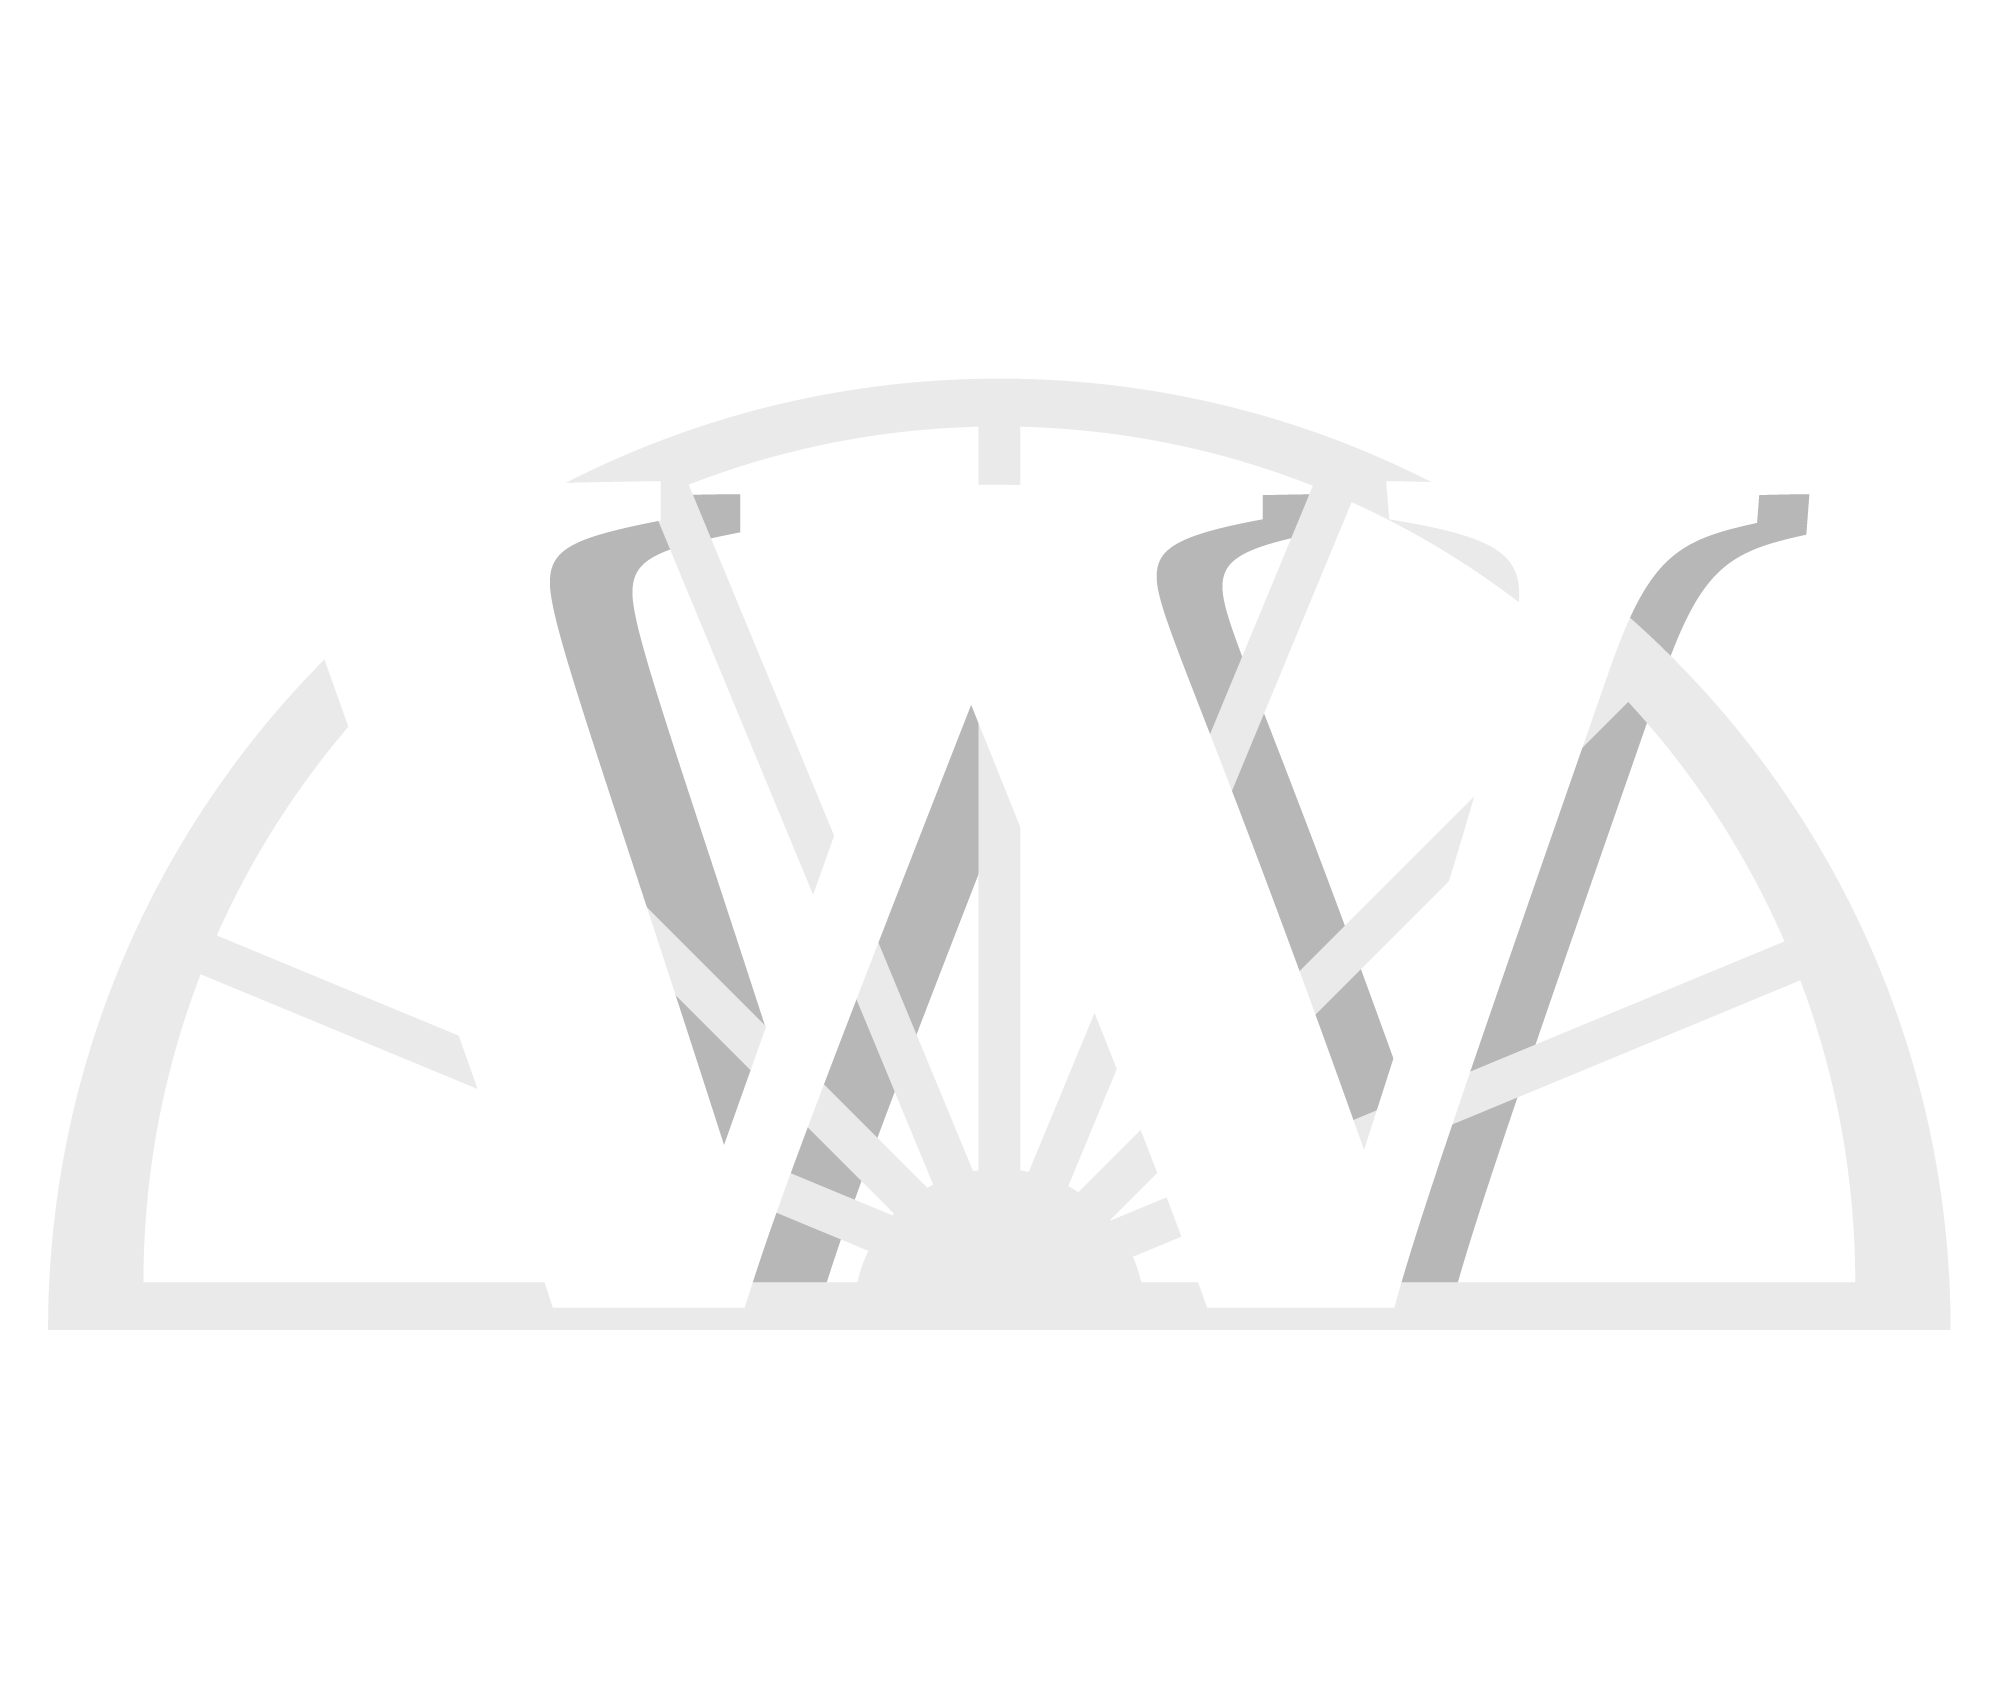 Alix Wagon Wheel Museum